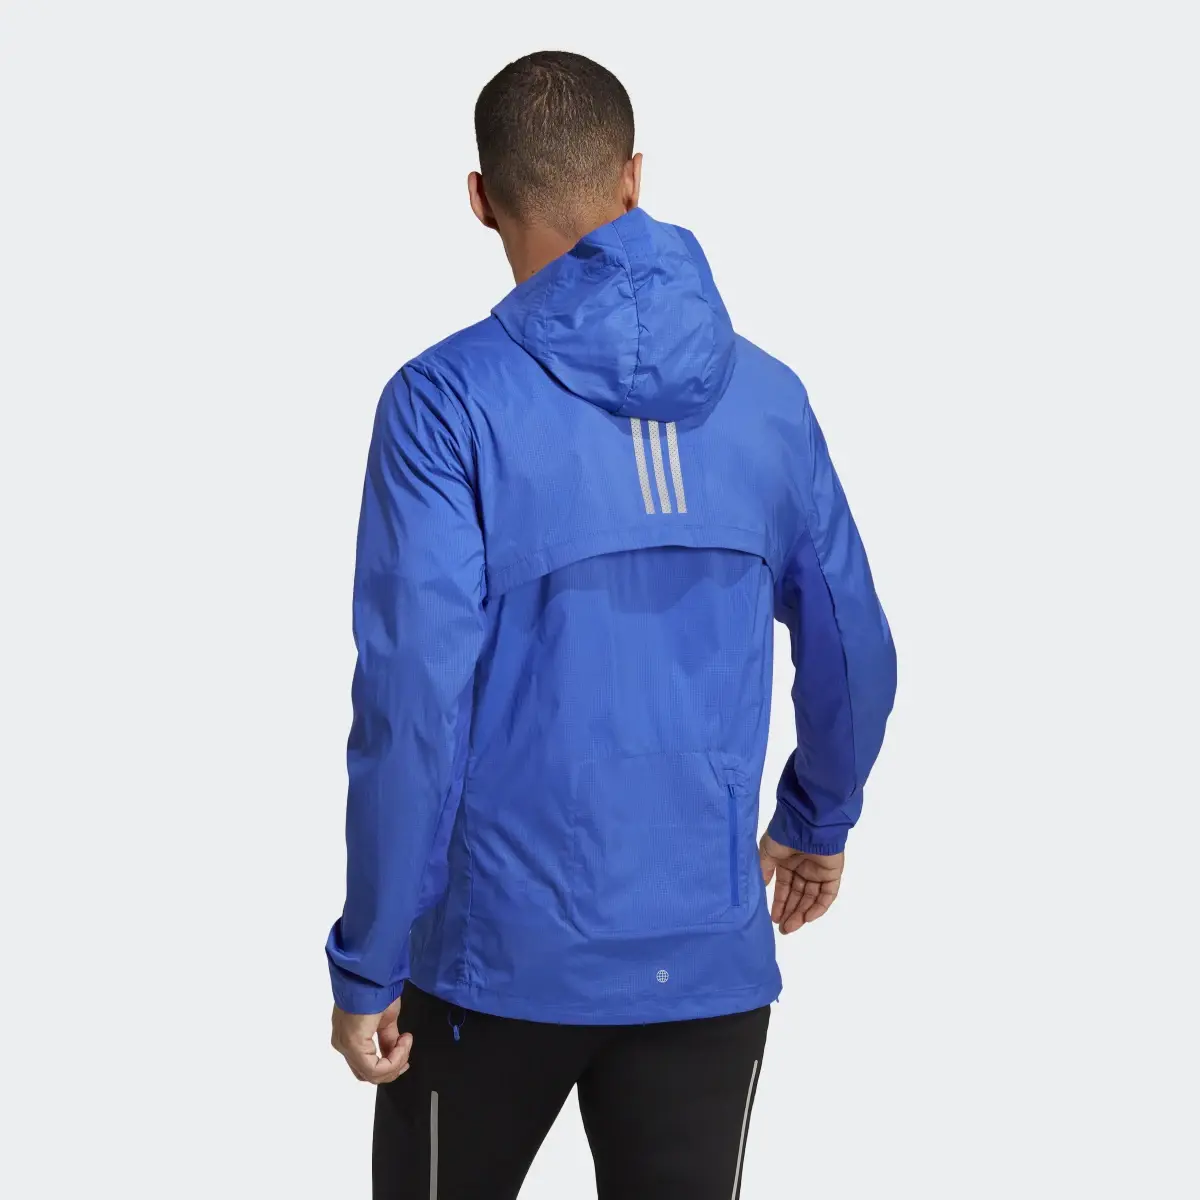 Adidas Marathon Jacket. 3